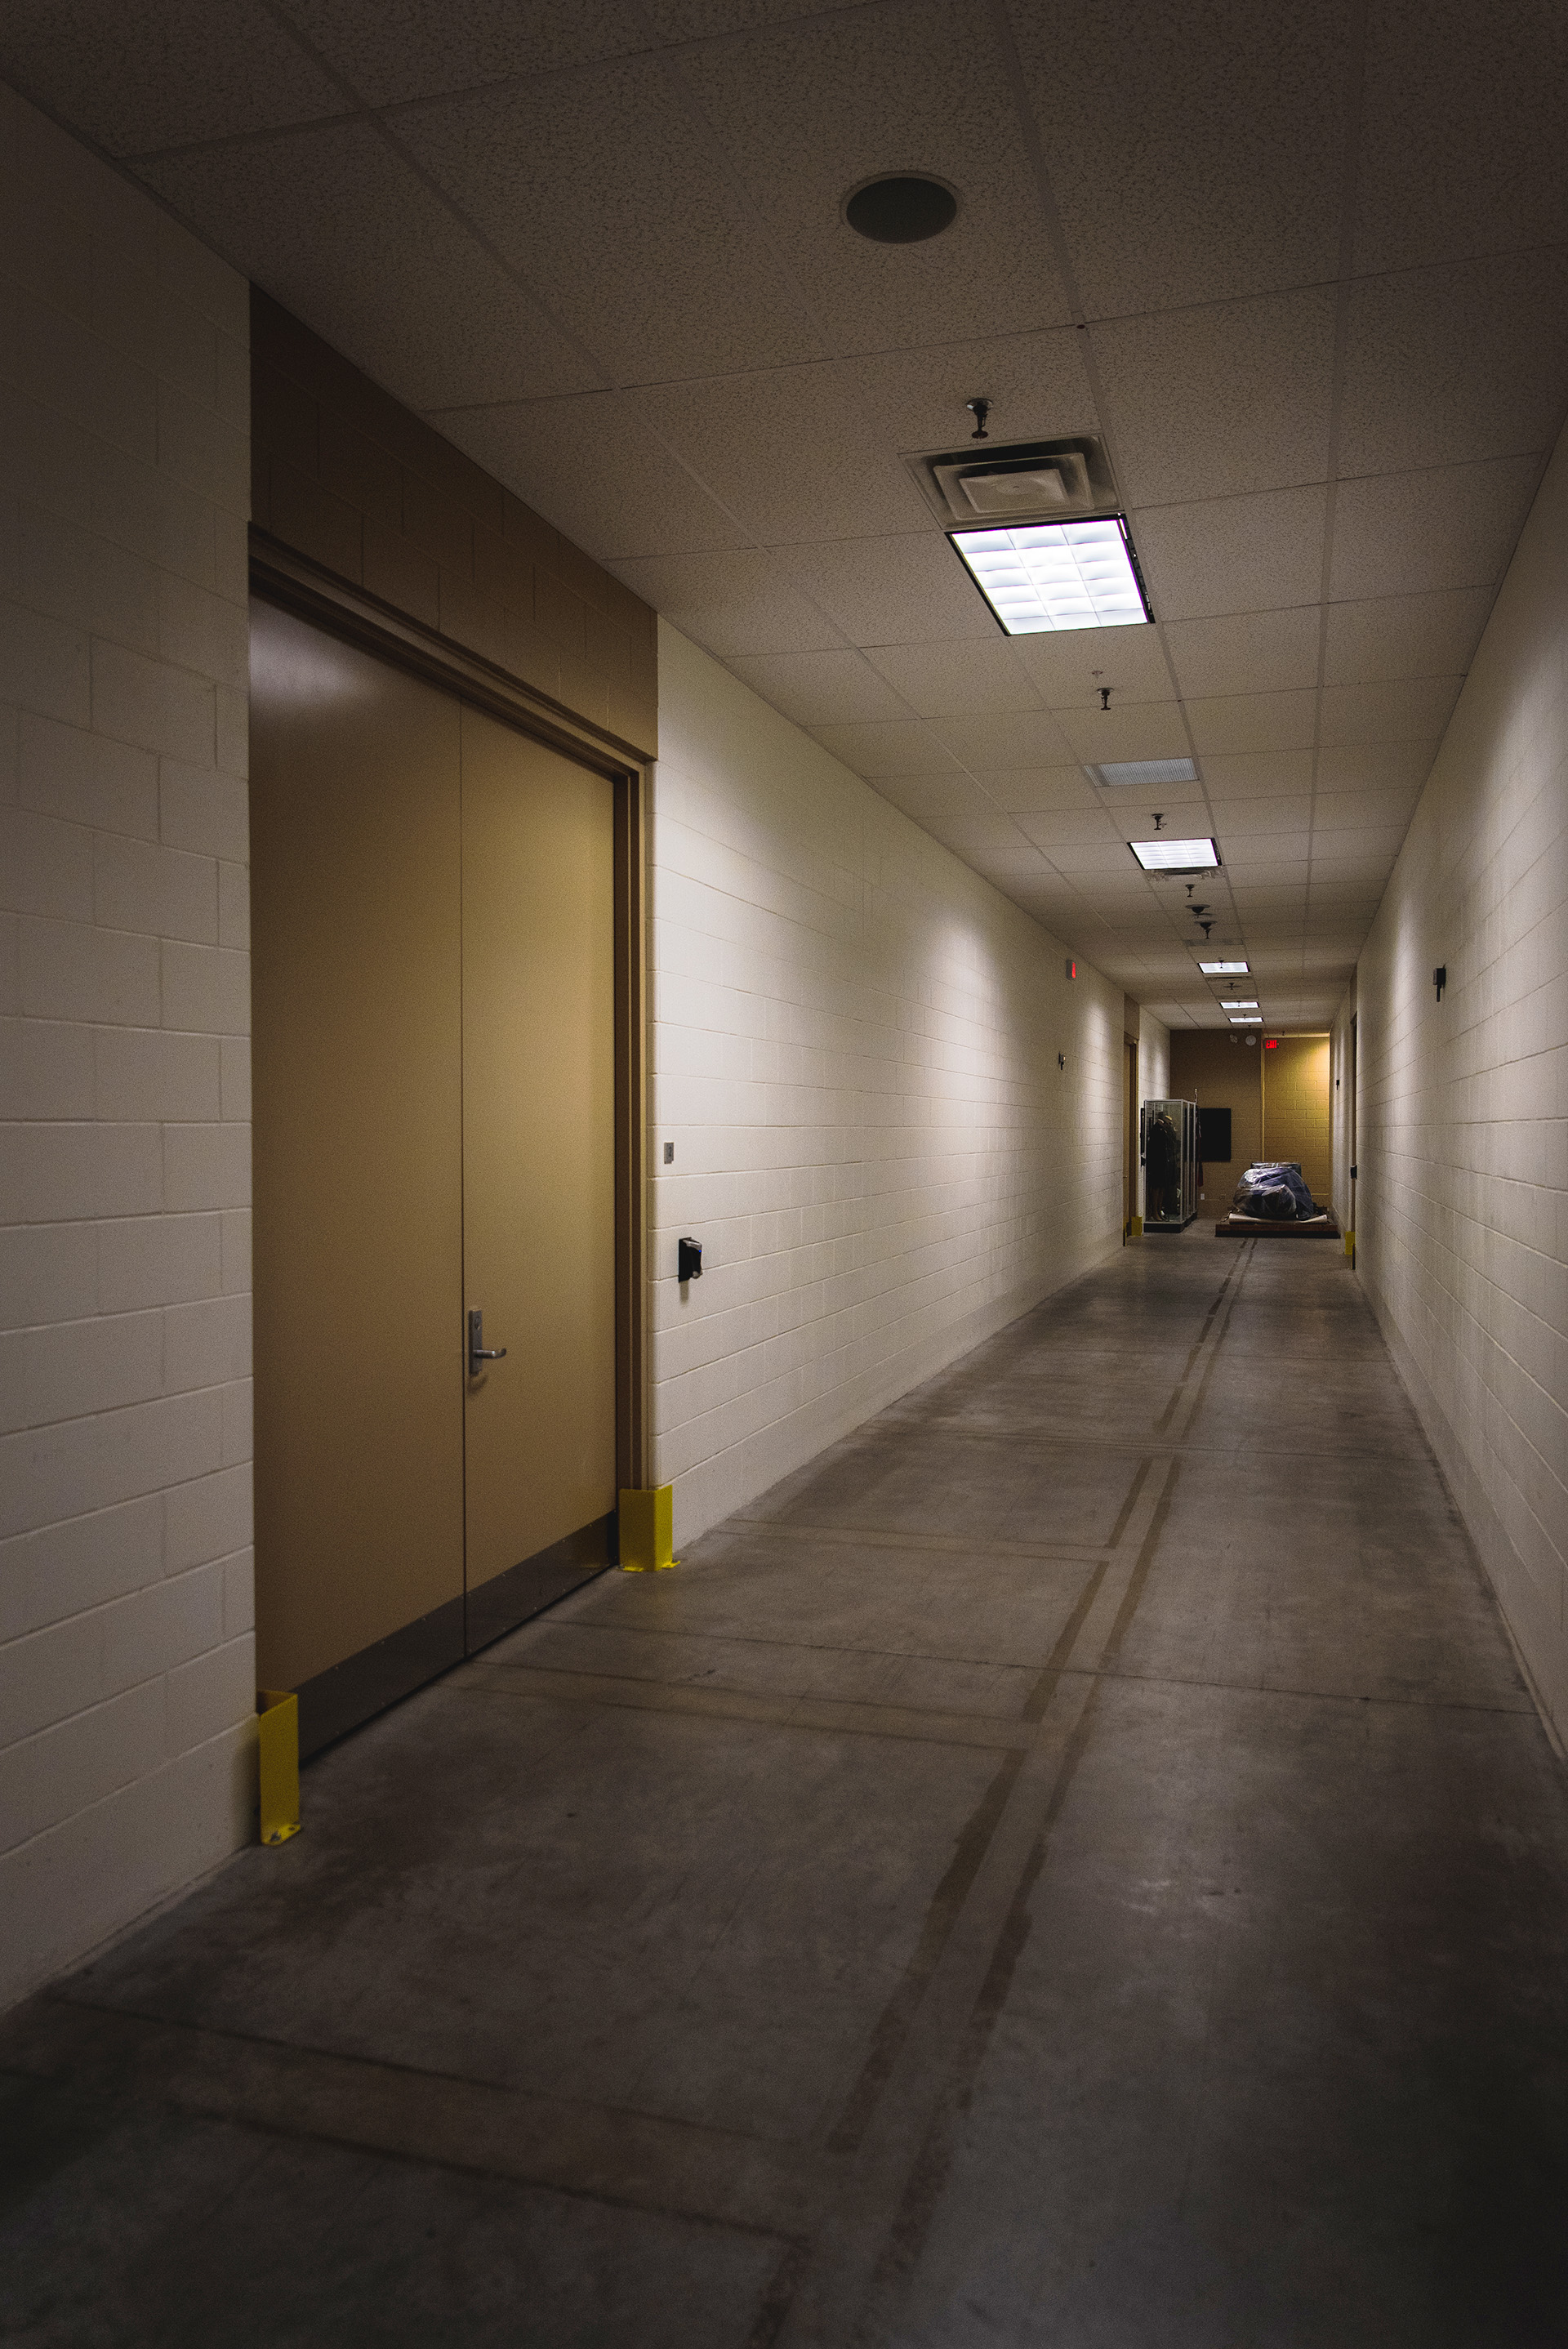 long, dimly lit hallway with cement floors.